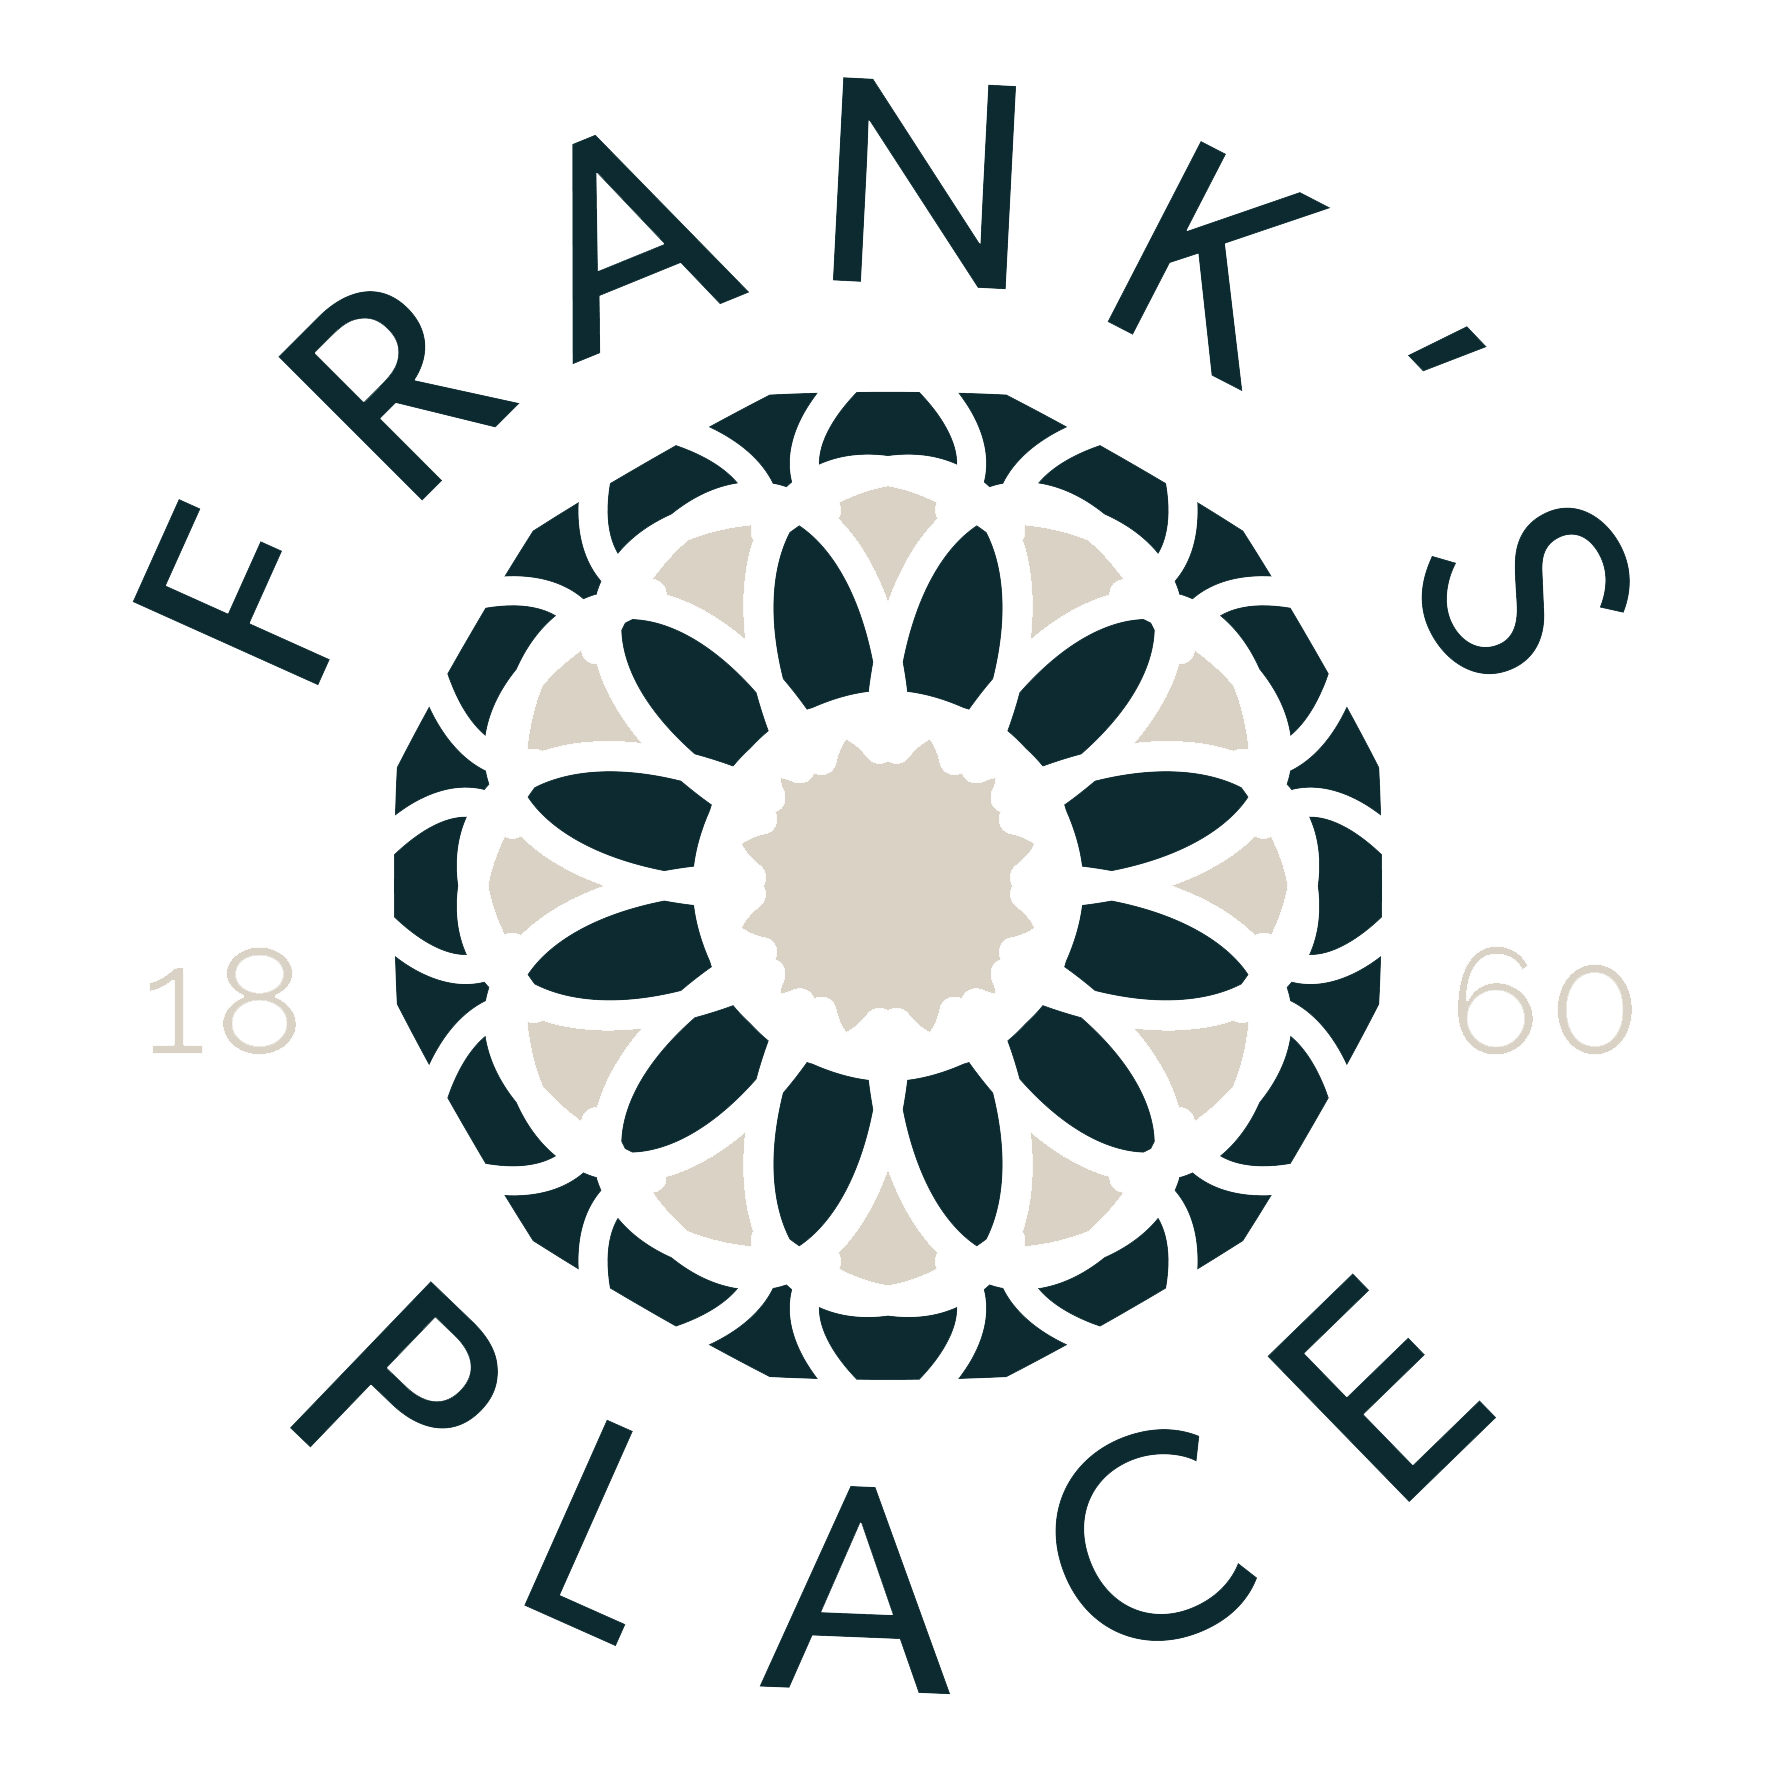 FranksPlace1860